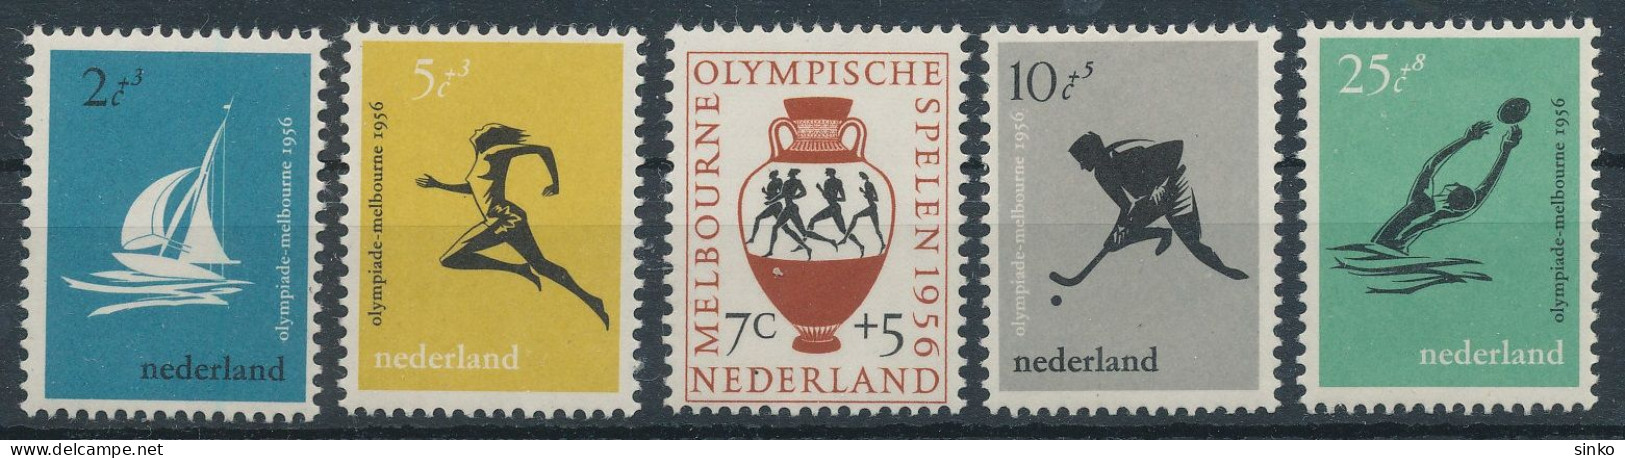 1956. Netherlands - Olympics - Verano 1956: Melbourne